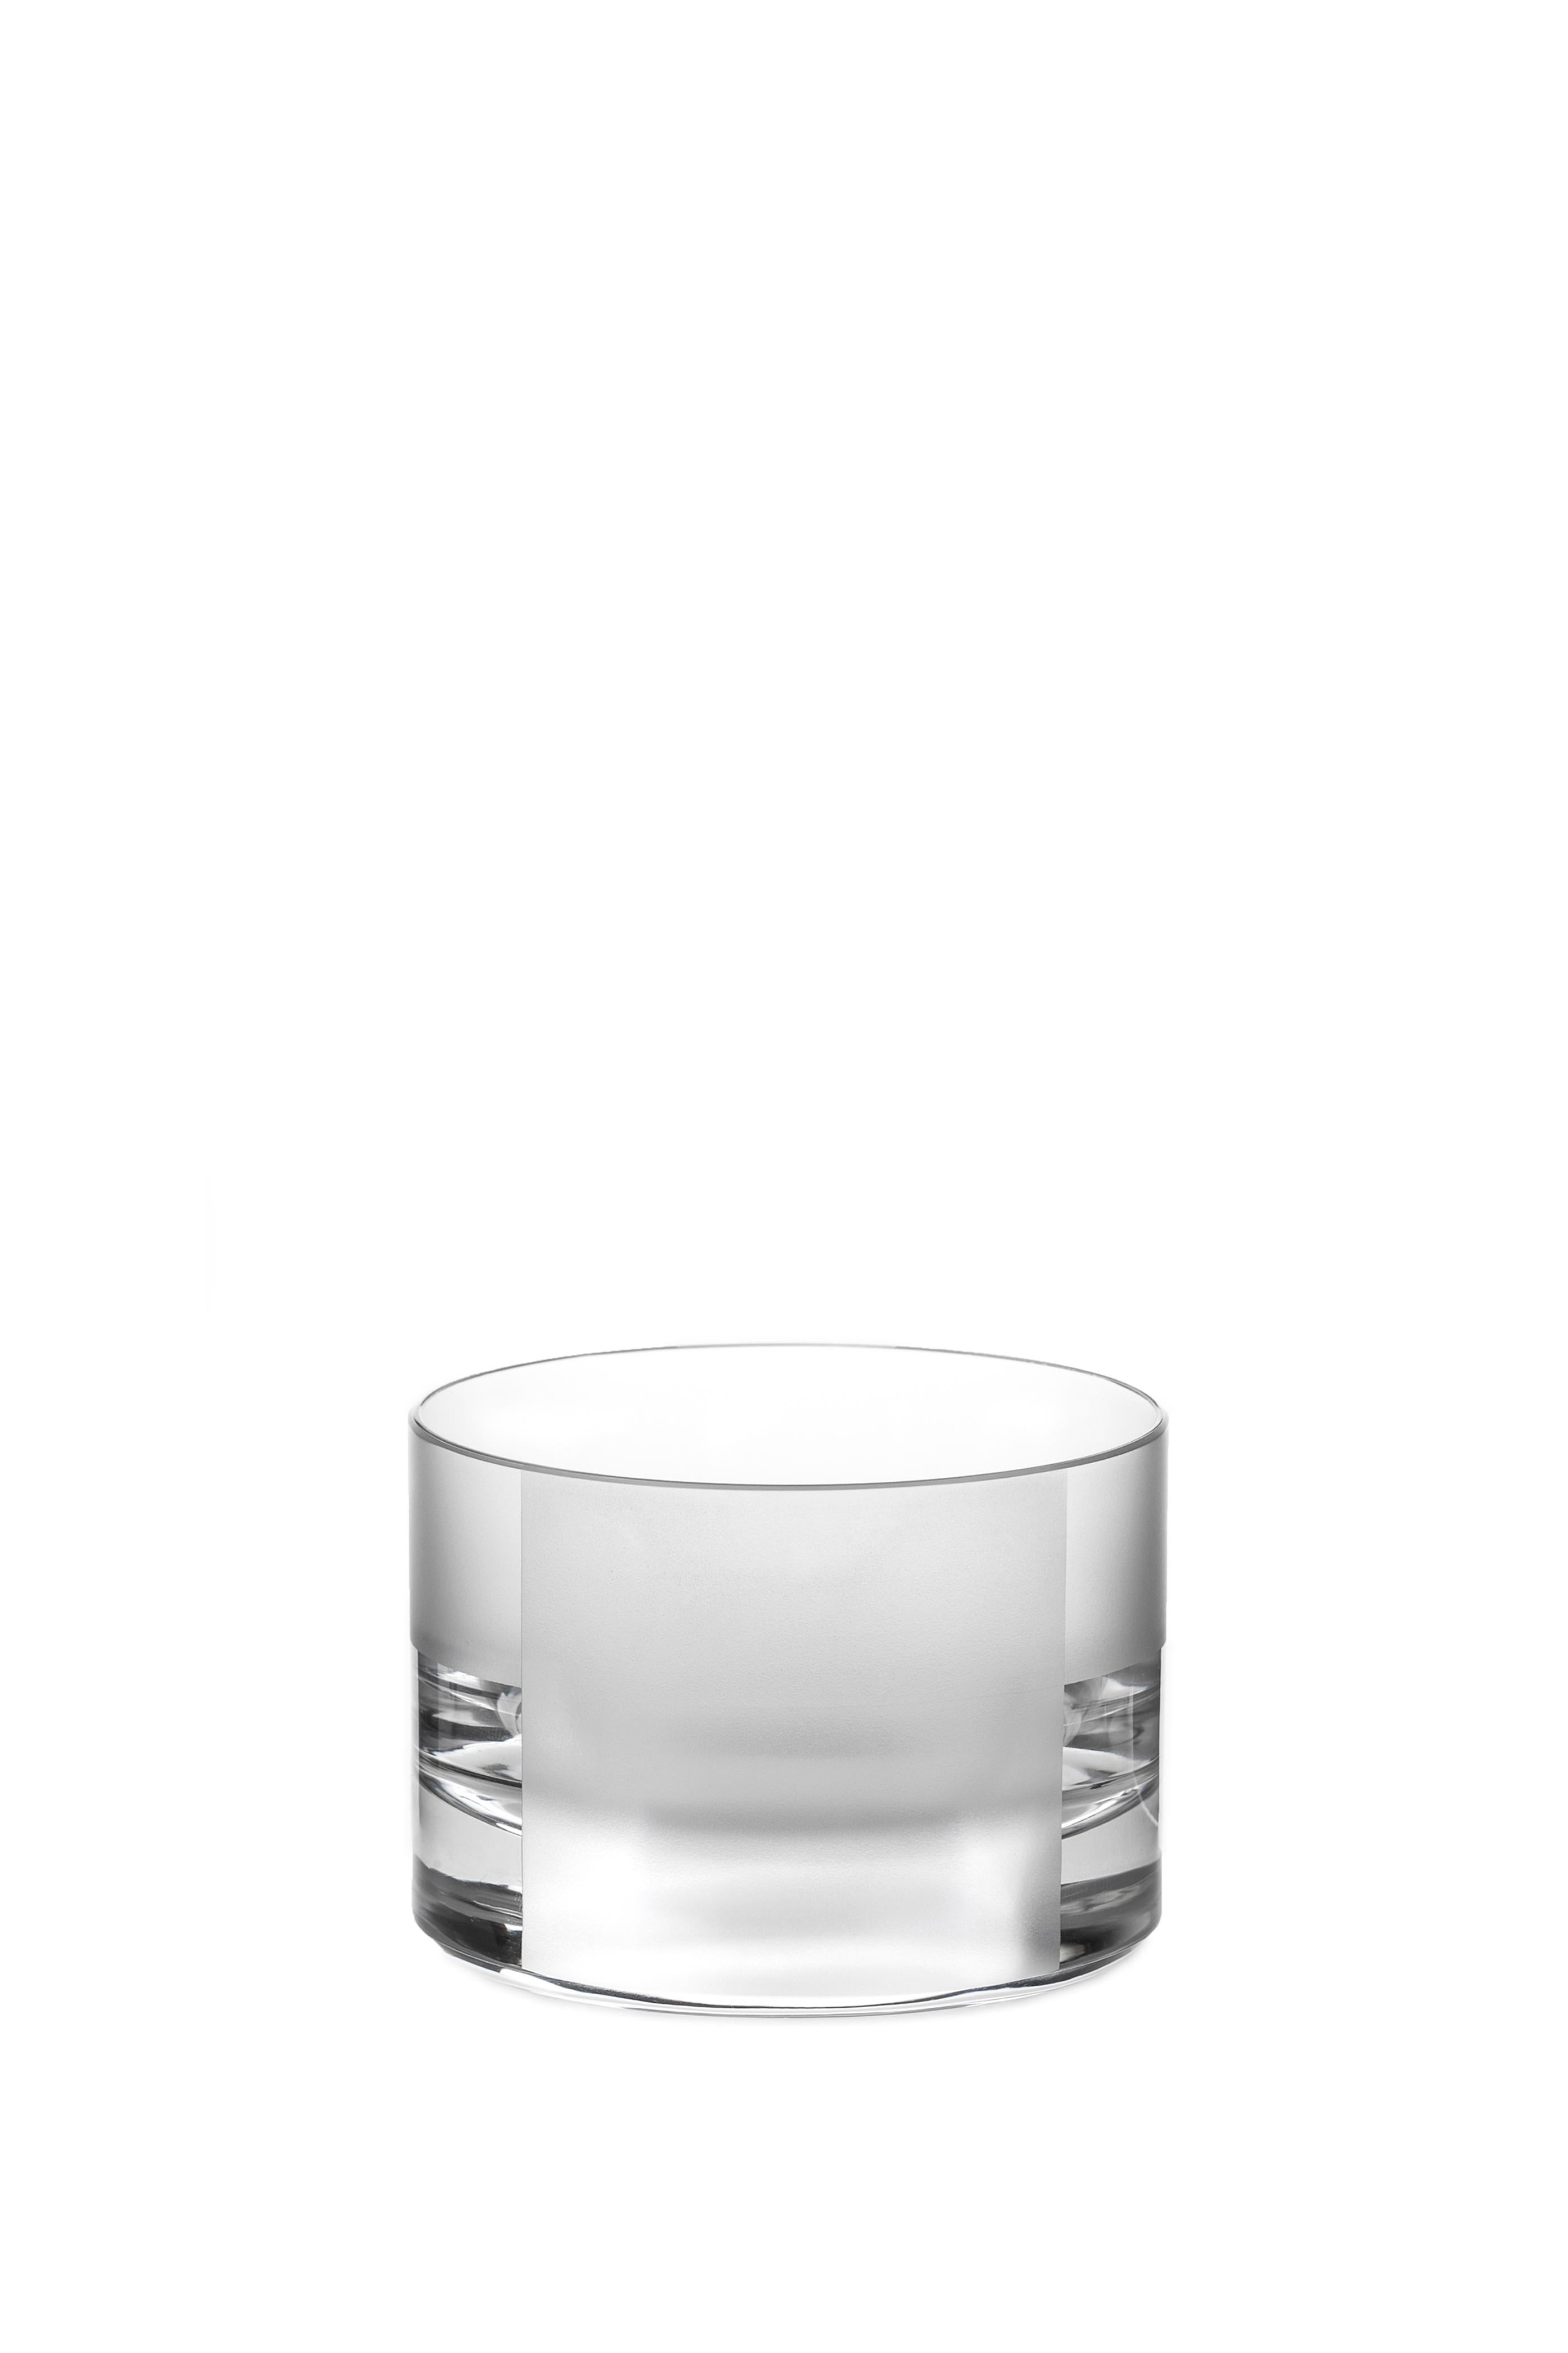 Scholten & Baijings Handmade Irish Crystal Low Glass 'Elements' Series For Sale 1